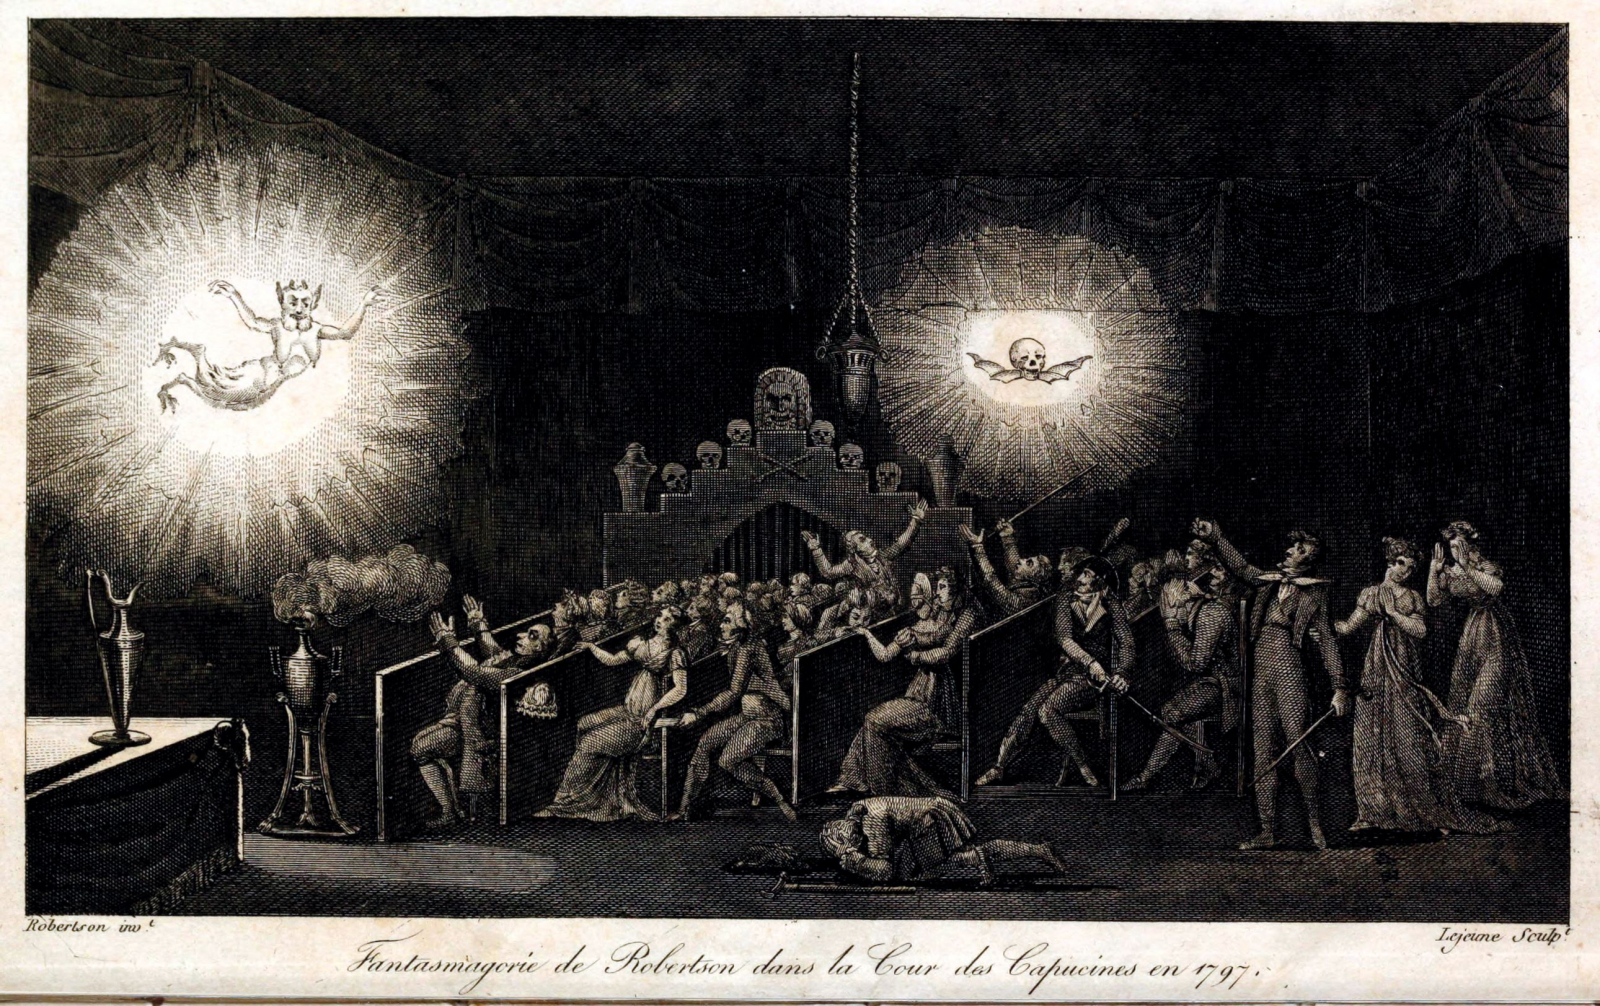 Rycina z książki Mémoires récréatifs, scientifiques et anecdotiques du physicien-aéronaute E.G. Robertson, Paryż 1831. Przedstawia pokaz fantasmagorii słynnego iluzjonisty Étienne-Gasparda Robertsona.